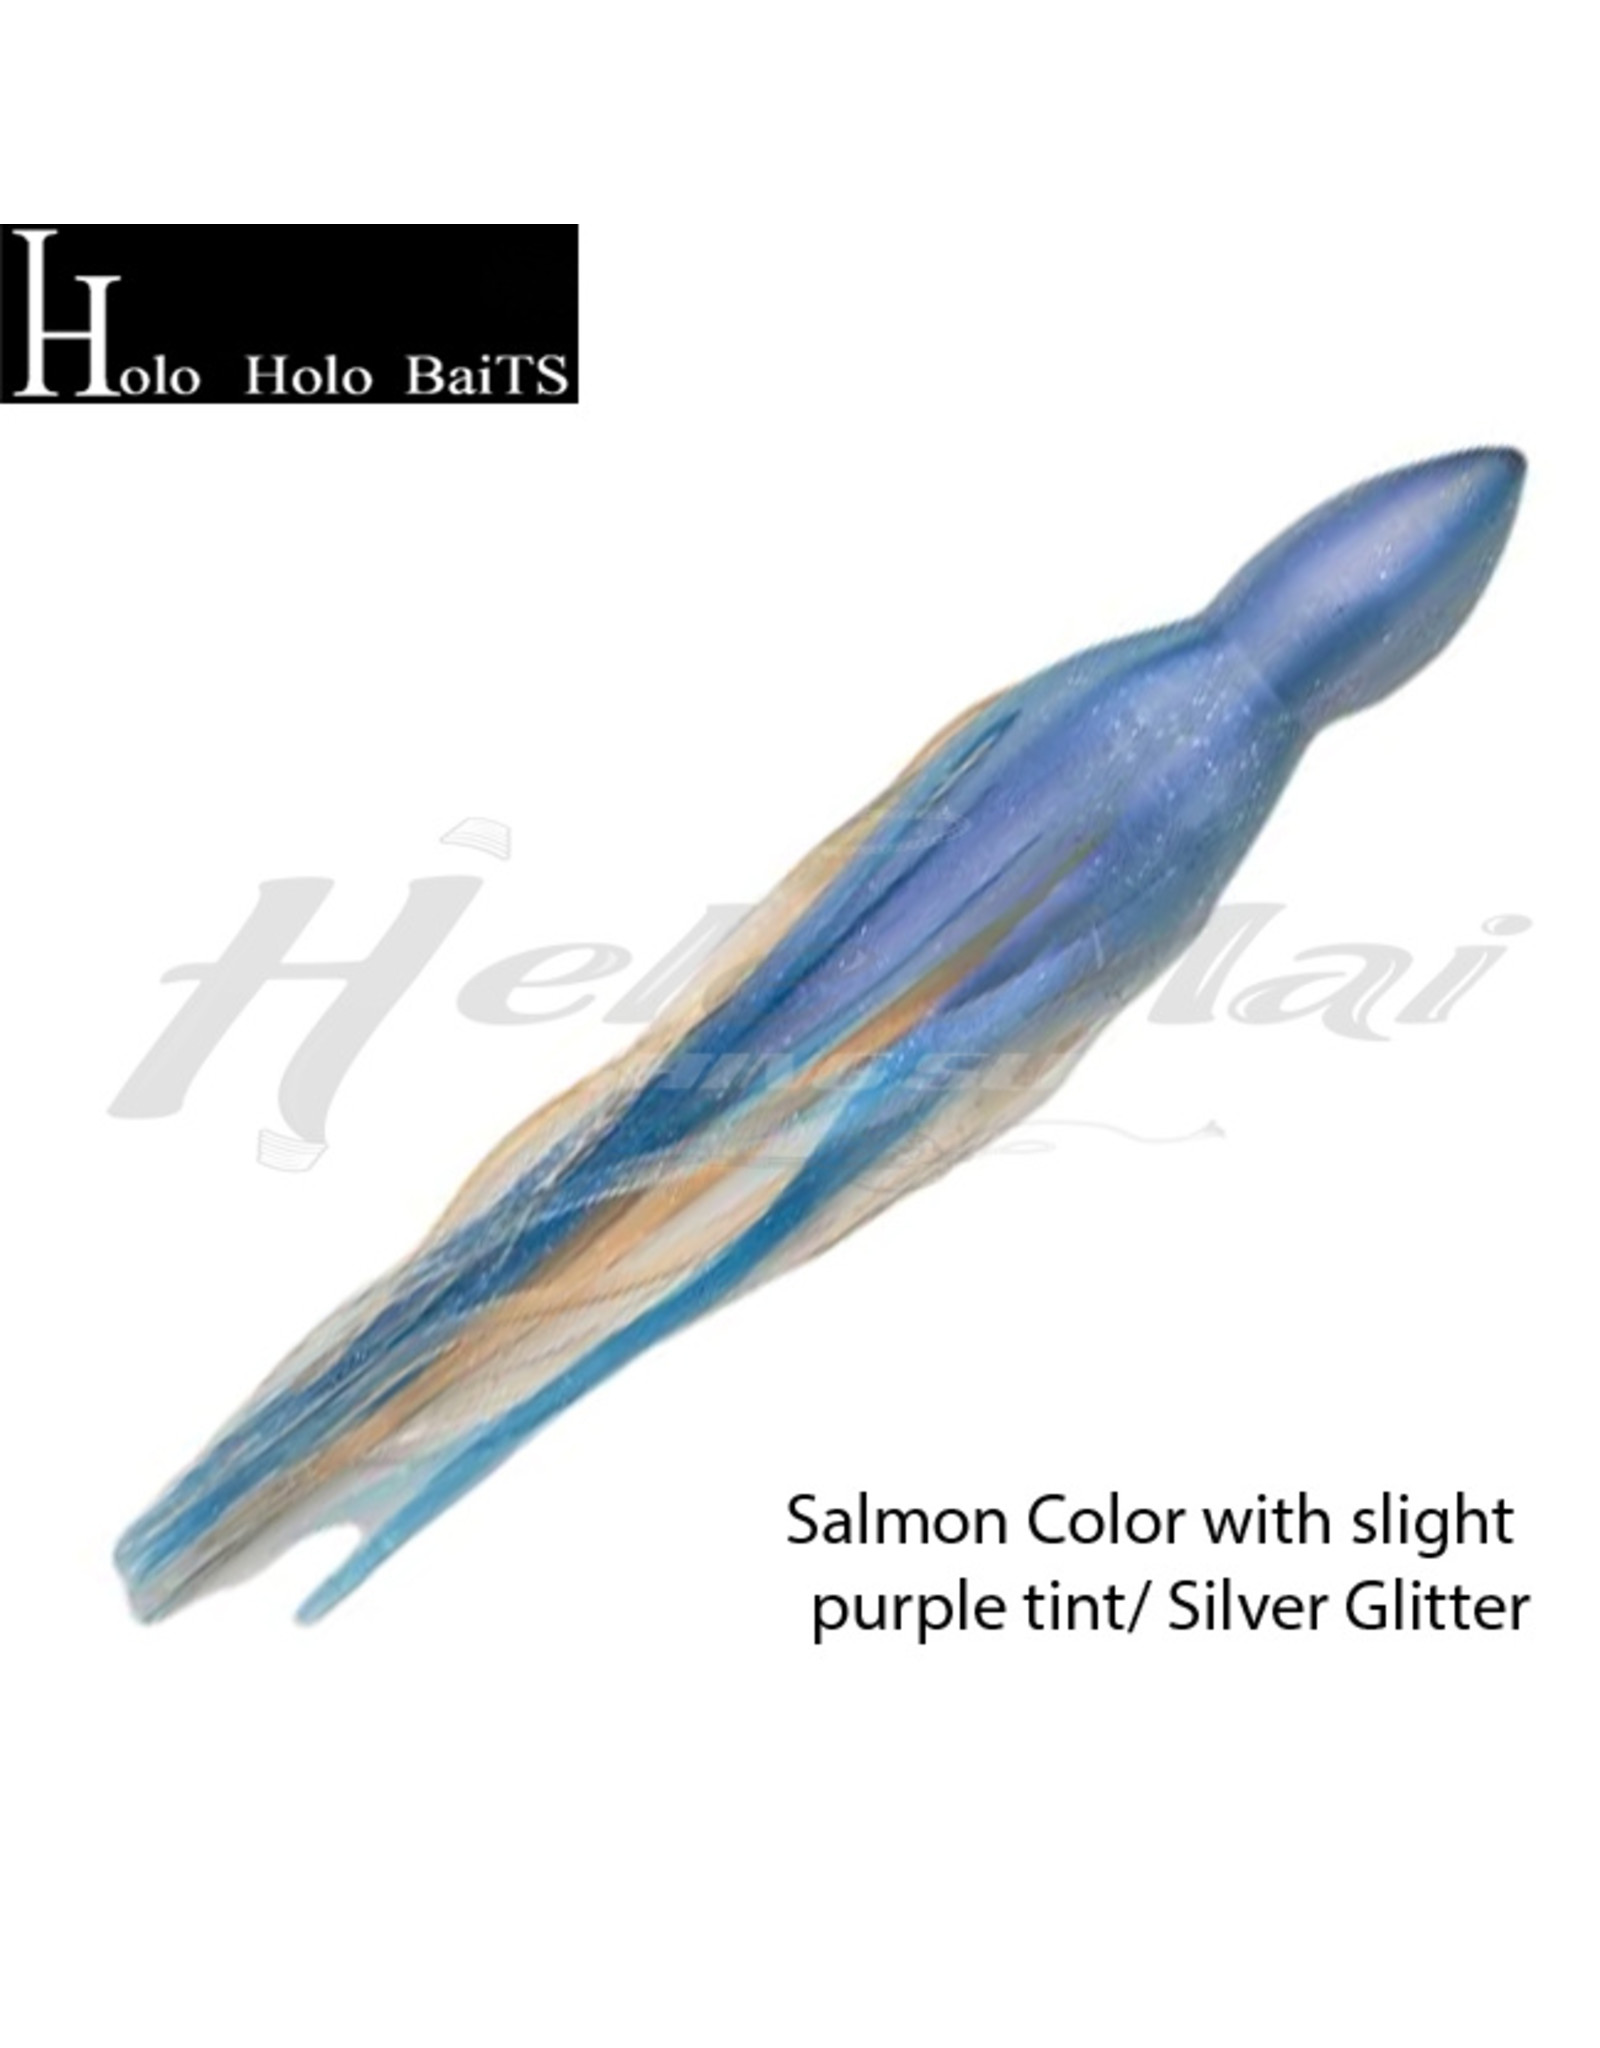 HOLO HOLO HAWAII (HHH) HH, 7" SQUID SKIRT PURPLE HAZE BLUE SALMON PURPLE SILVER GLITTER